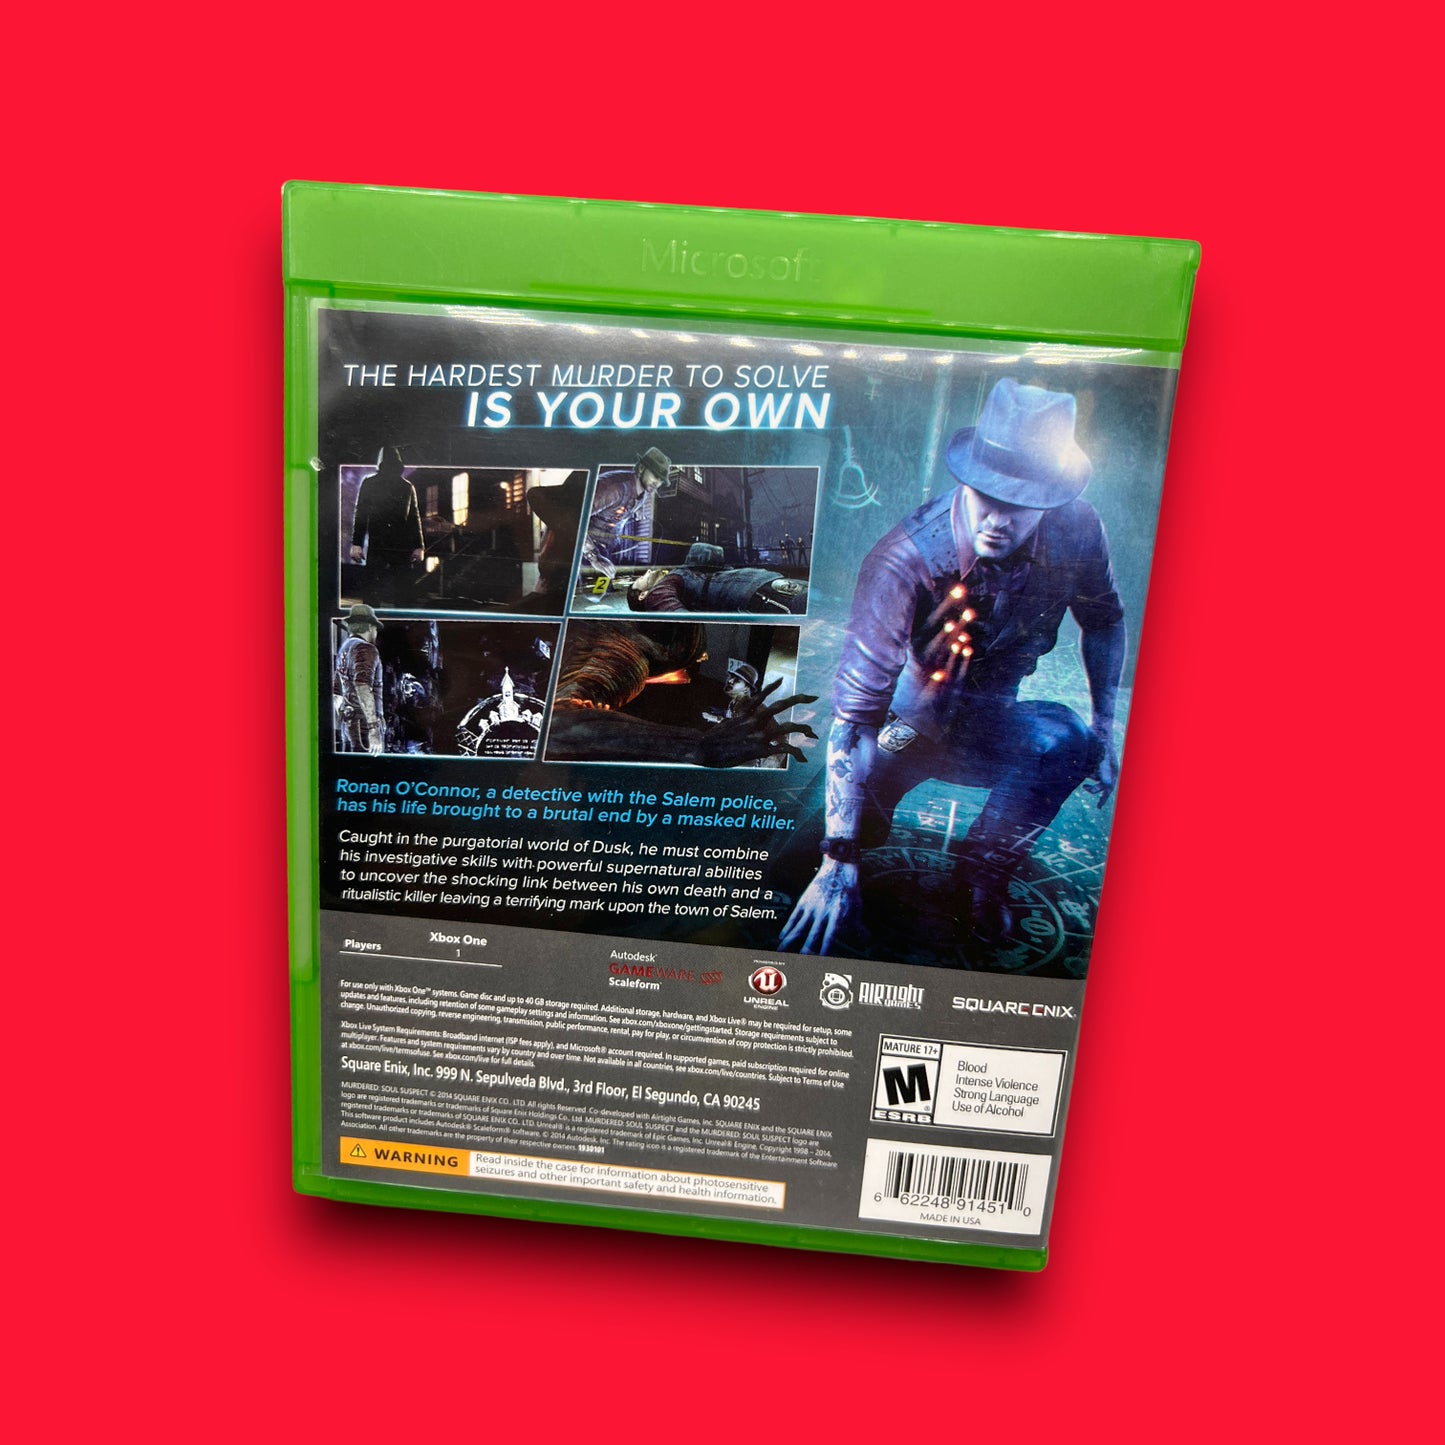 Murdered: Soul Suspect (Microsoft Xbox One, 2014)